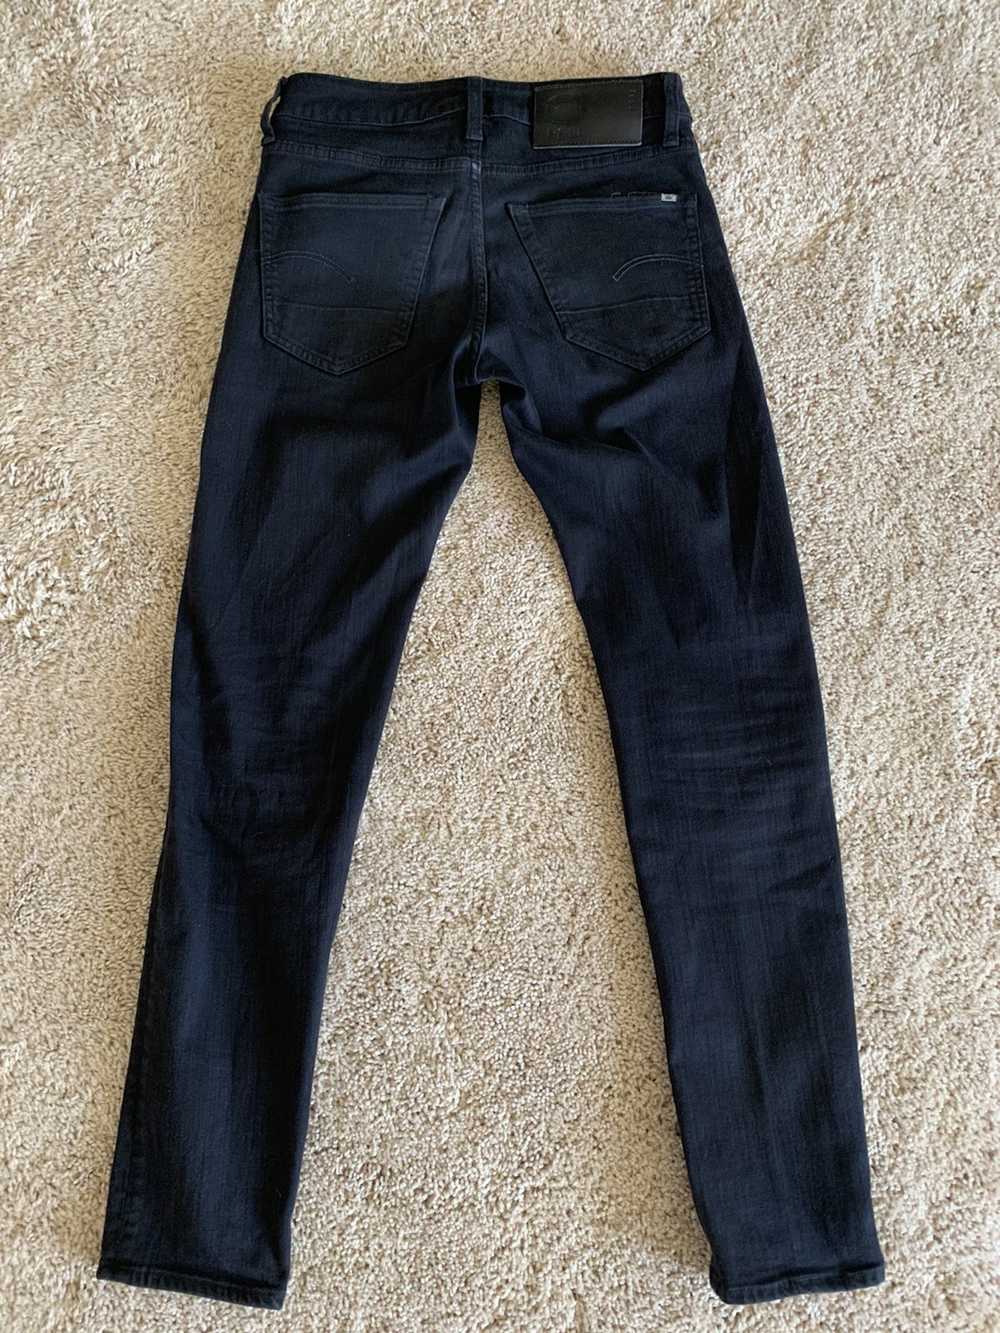 G Star Raw G star jeans 28 x 32 - image 2